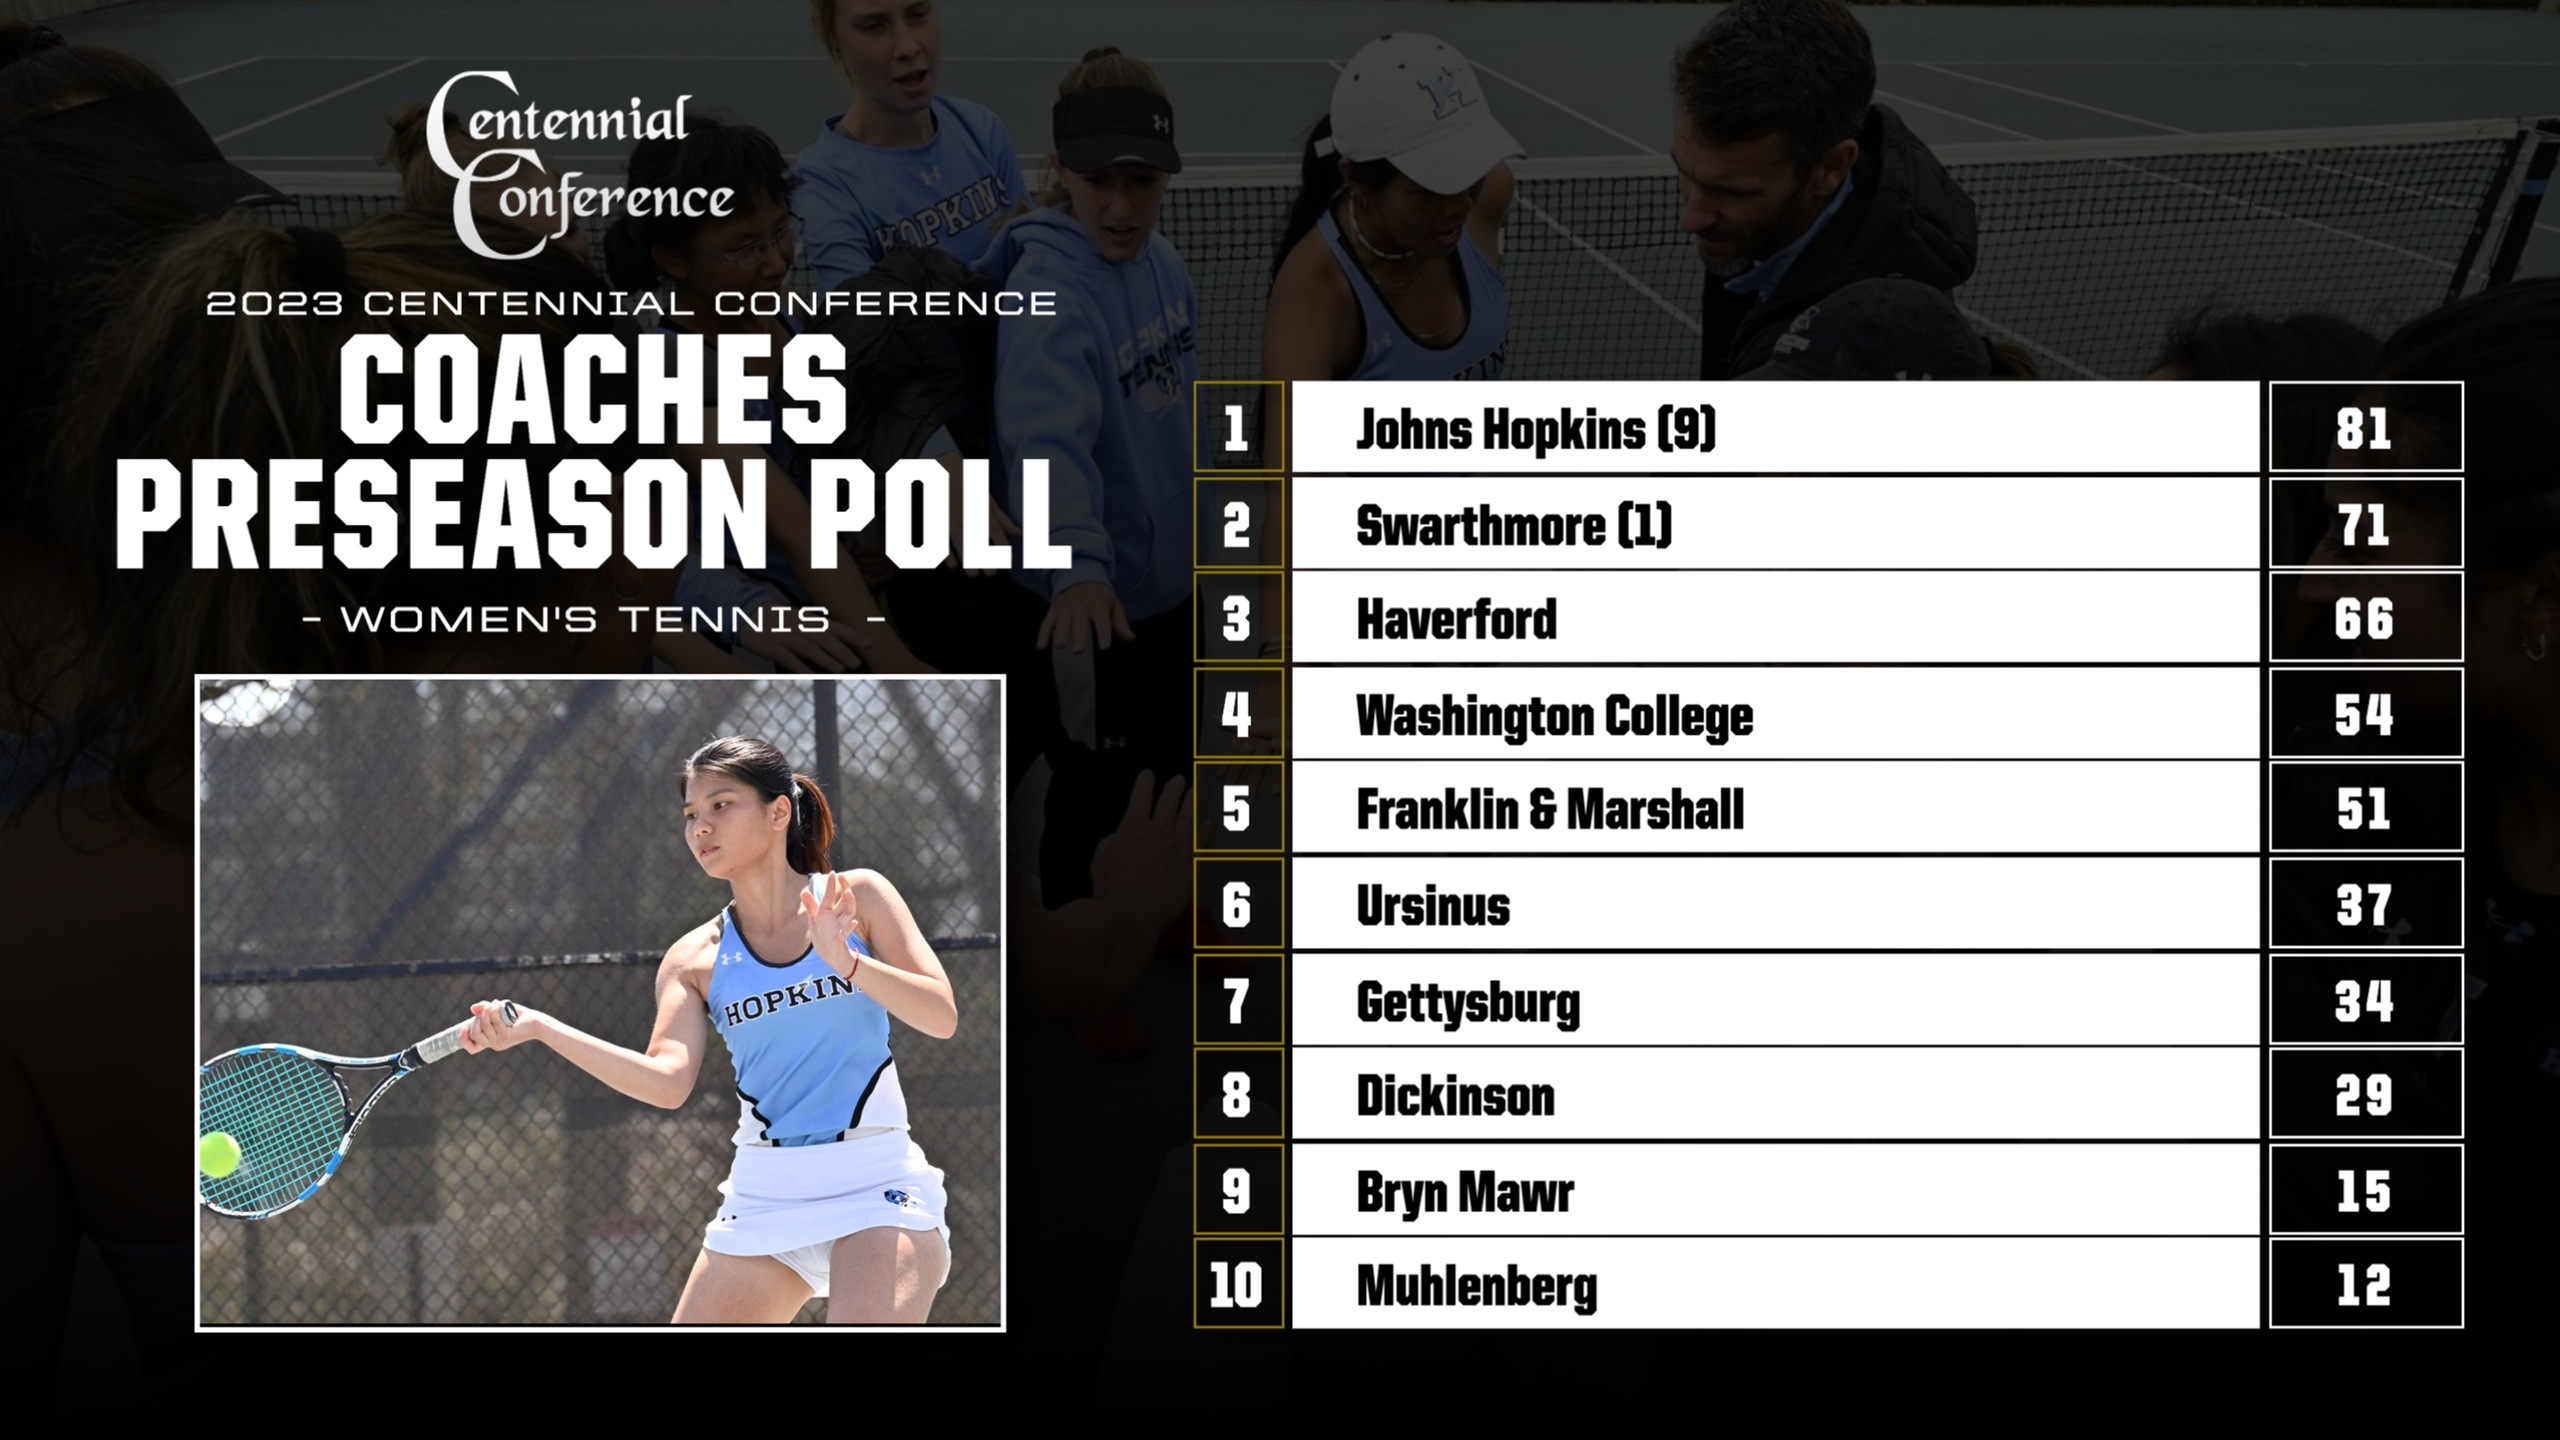 Hopkins Tabbed as Favorite in Women's Tennis Preseason Poll